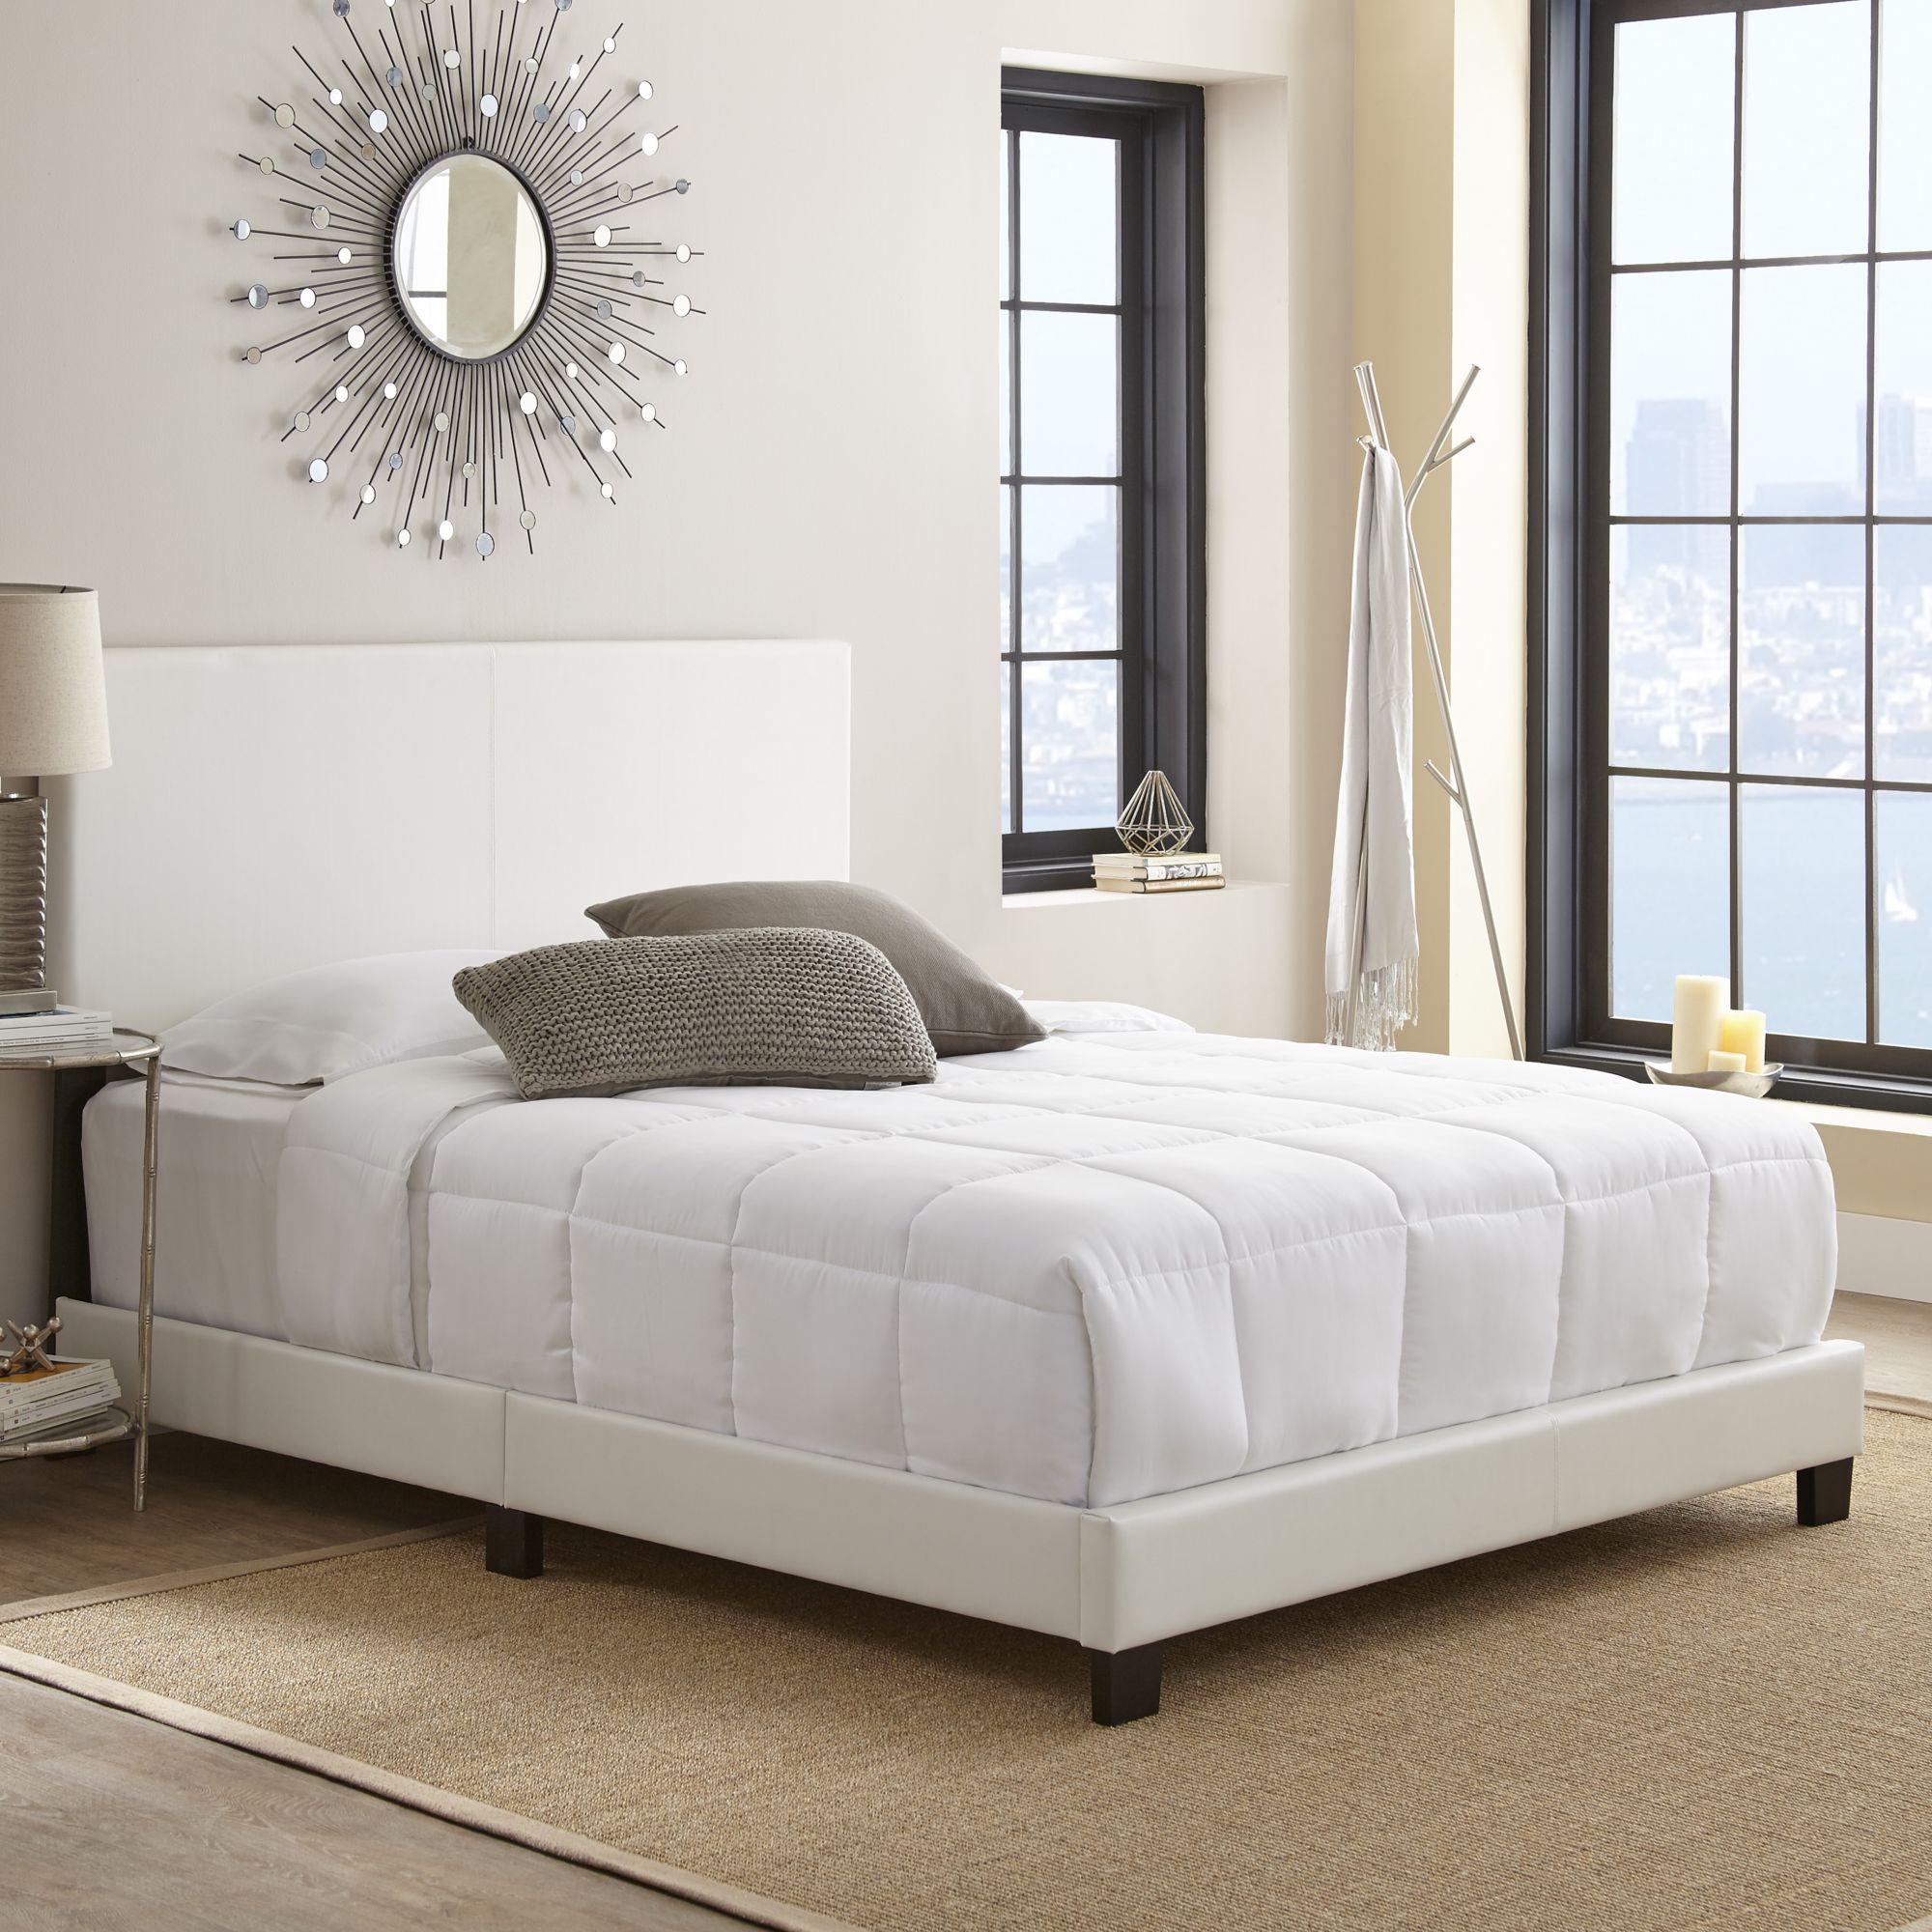 Contour Rest Garnet King Size Simulated Leather Platform Bed Frame - White